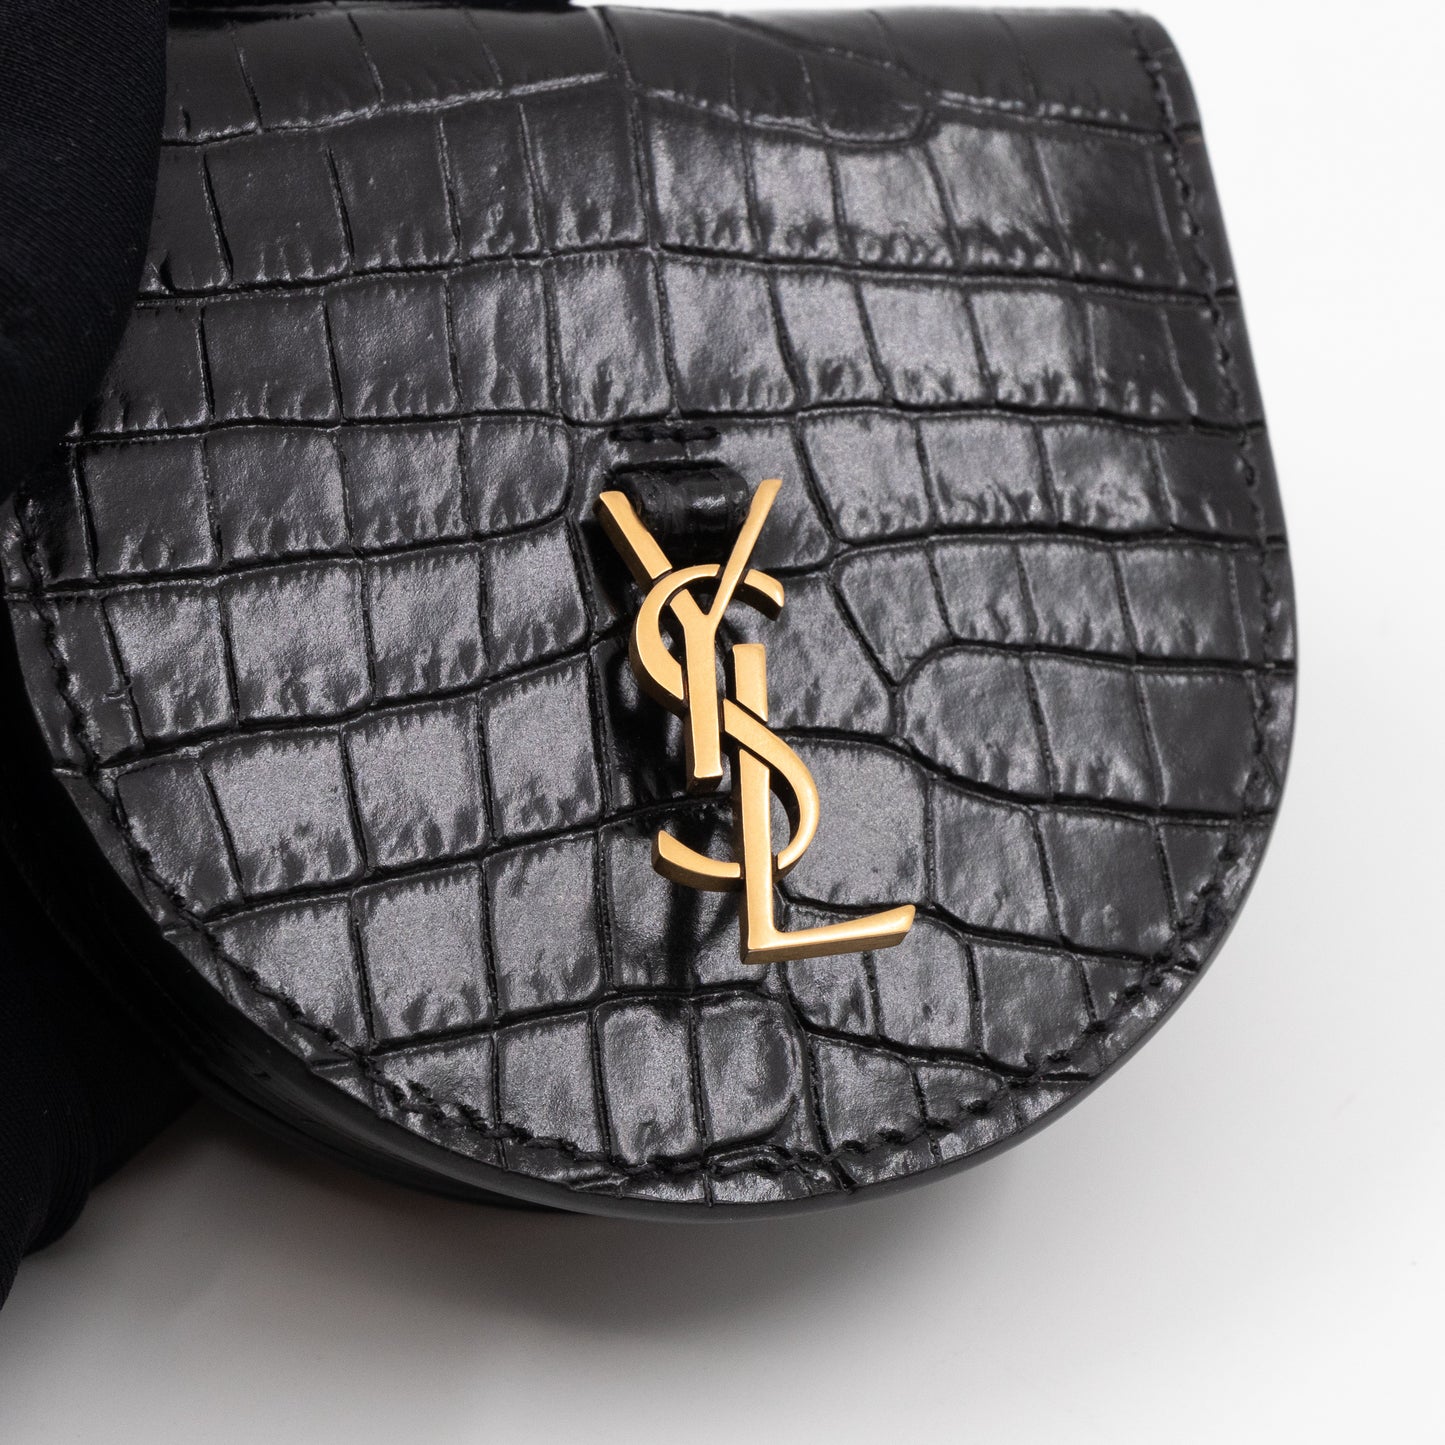 Le K Baby Chain Crossbody Bag Crocodile Embossed Leather